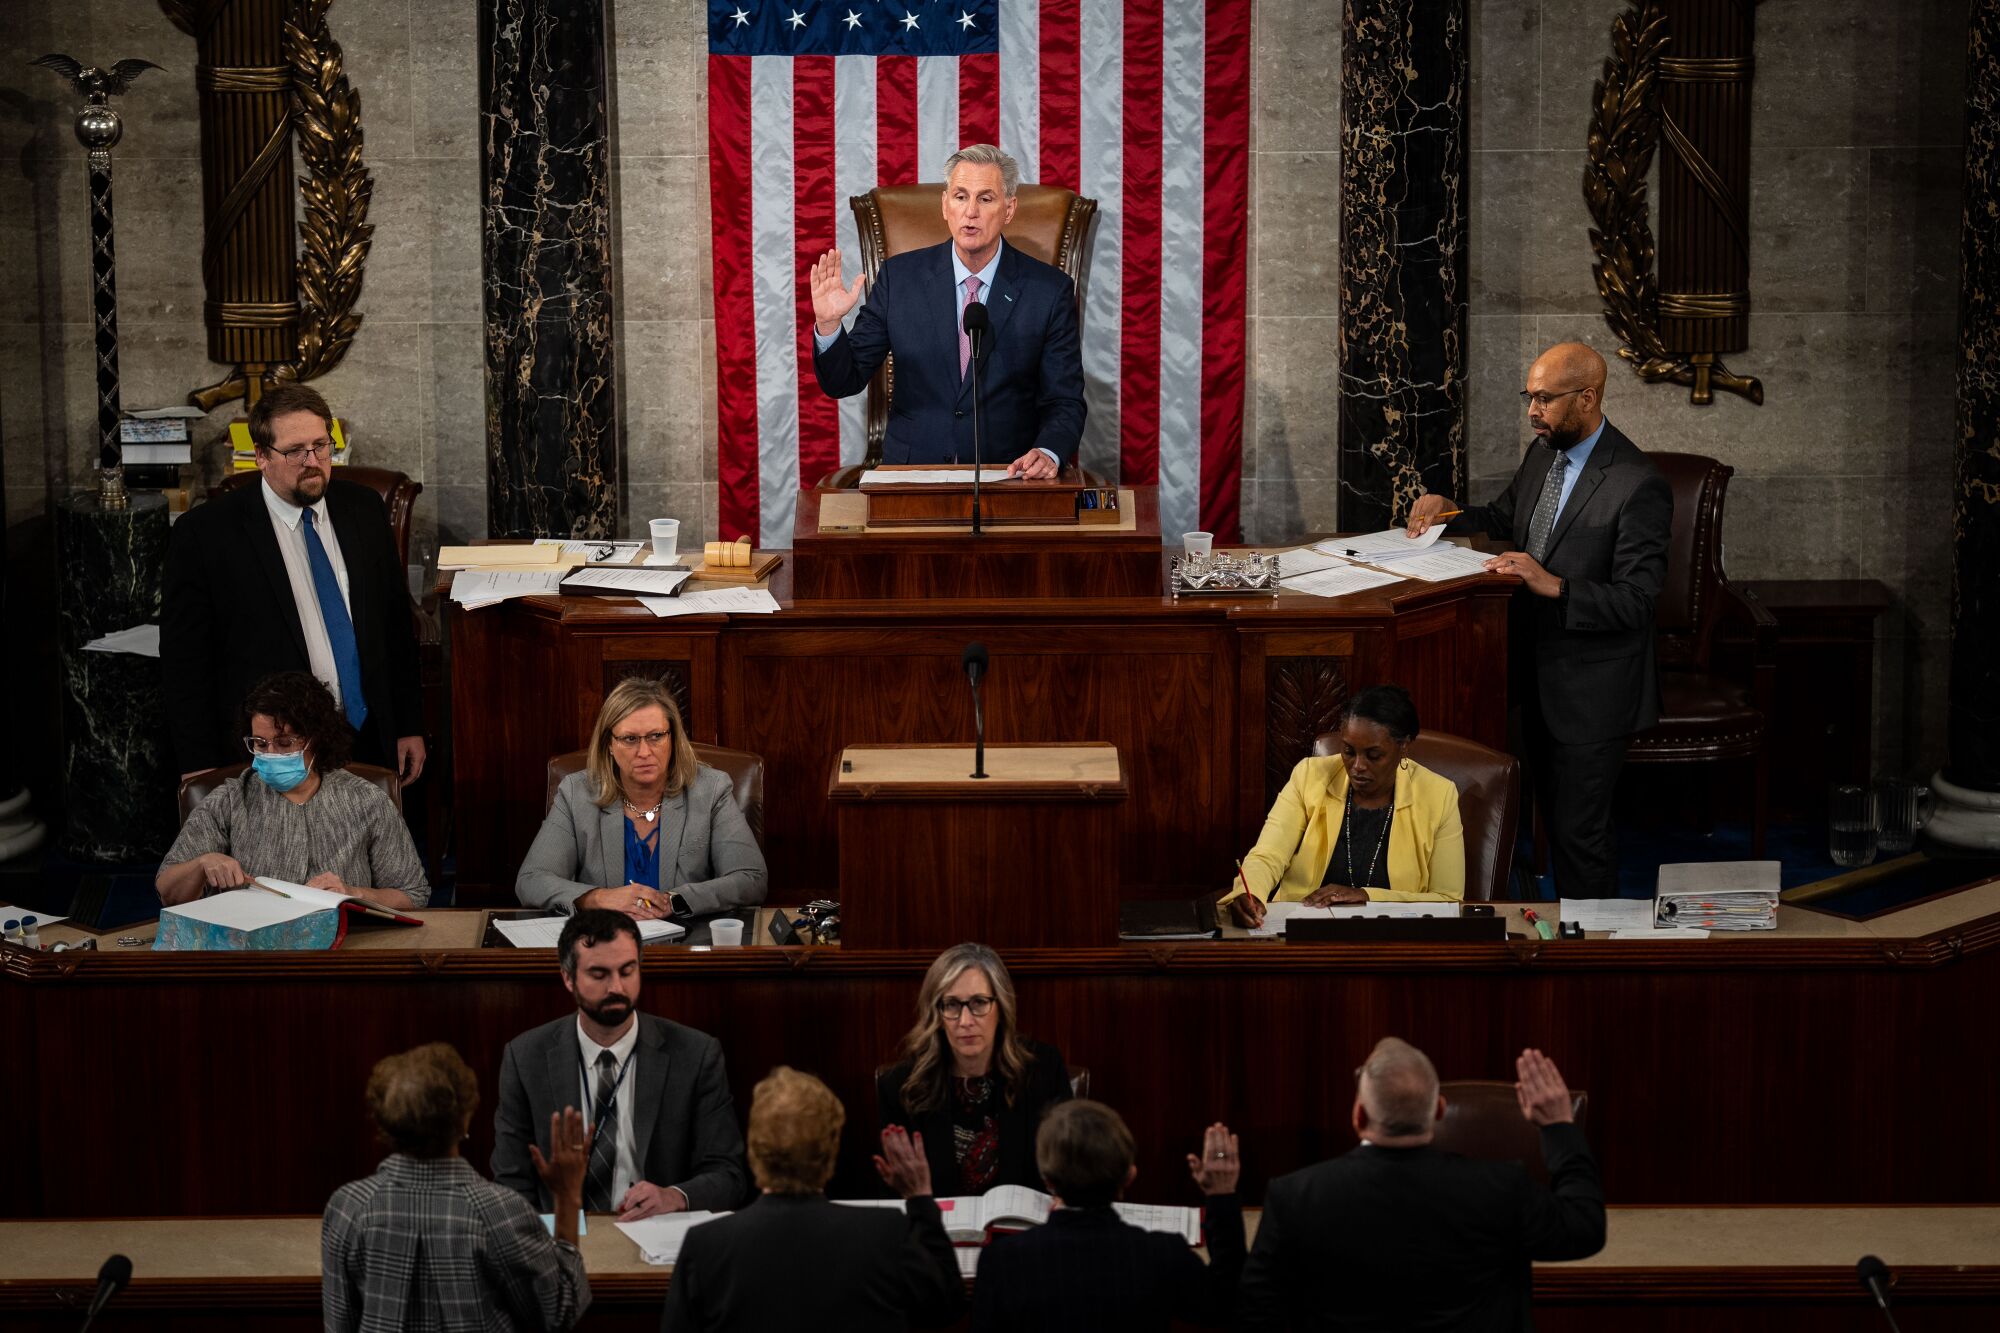 McCarthy swears in members of the House